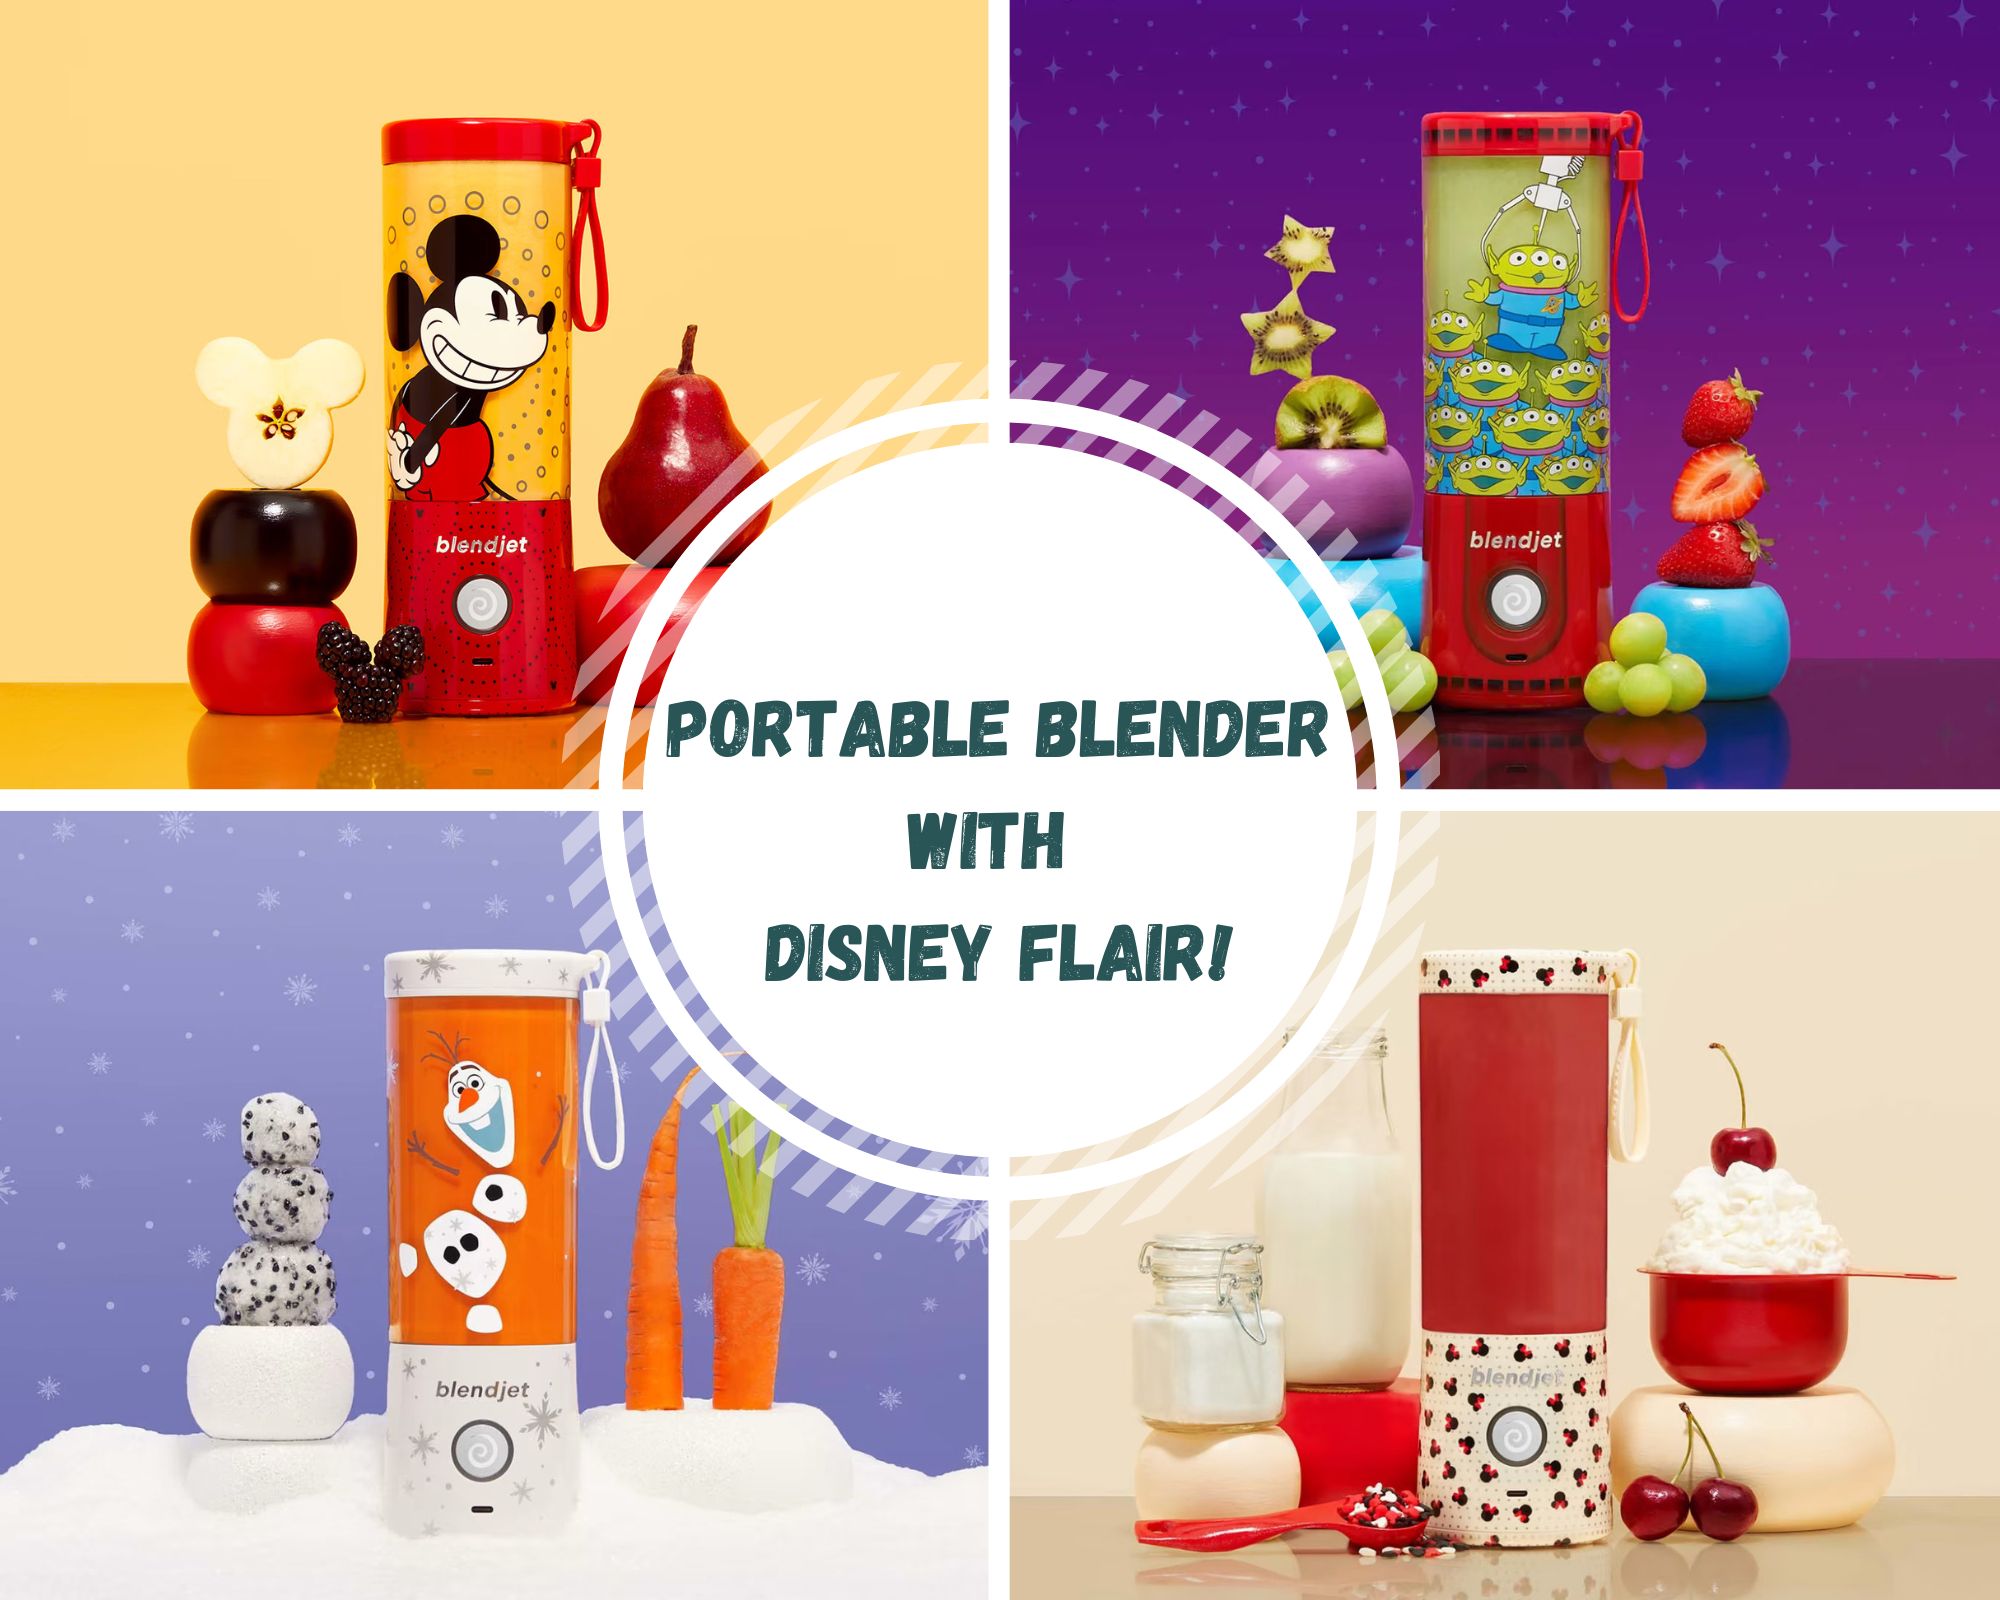 Portable Blender with Disney flair! – The Disney Nerds Podcast